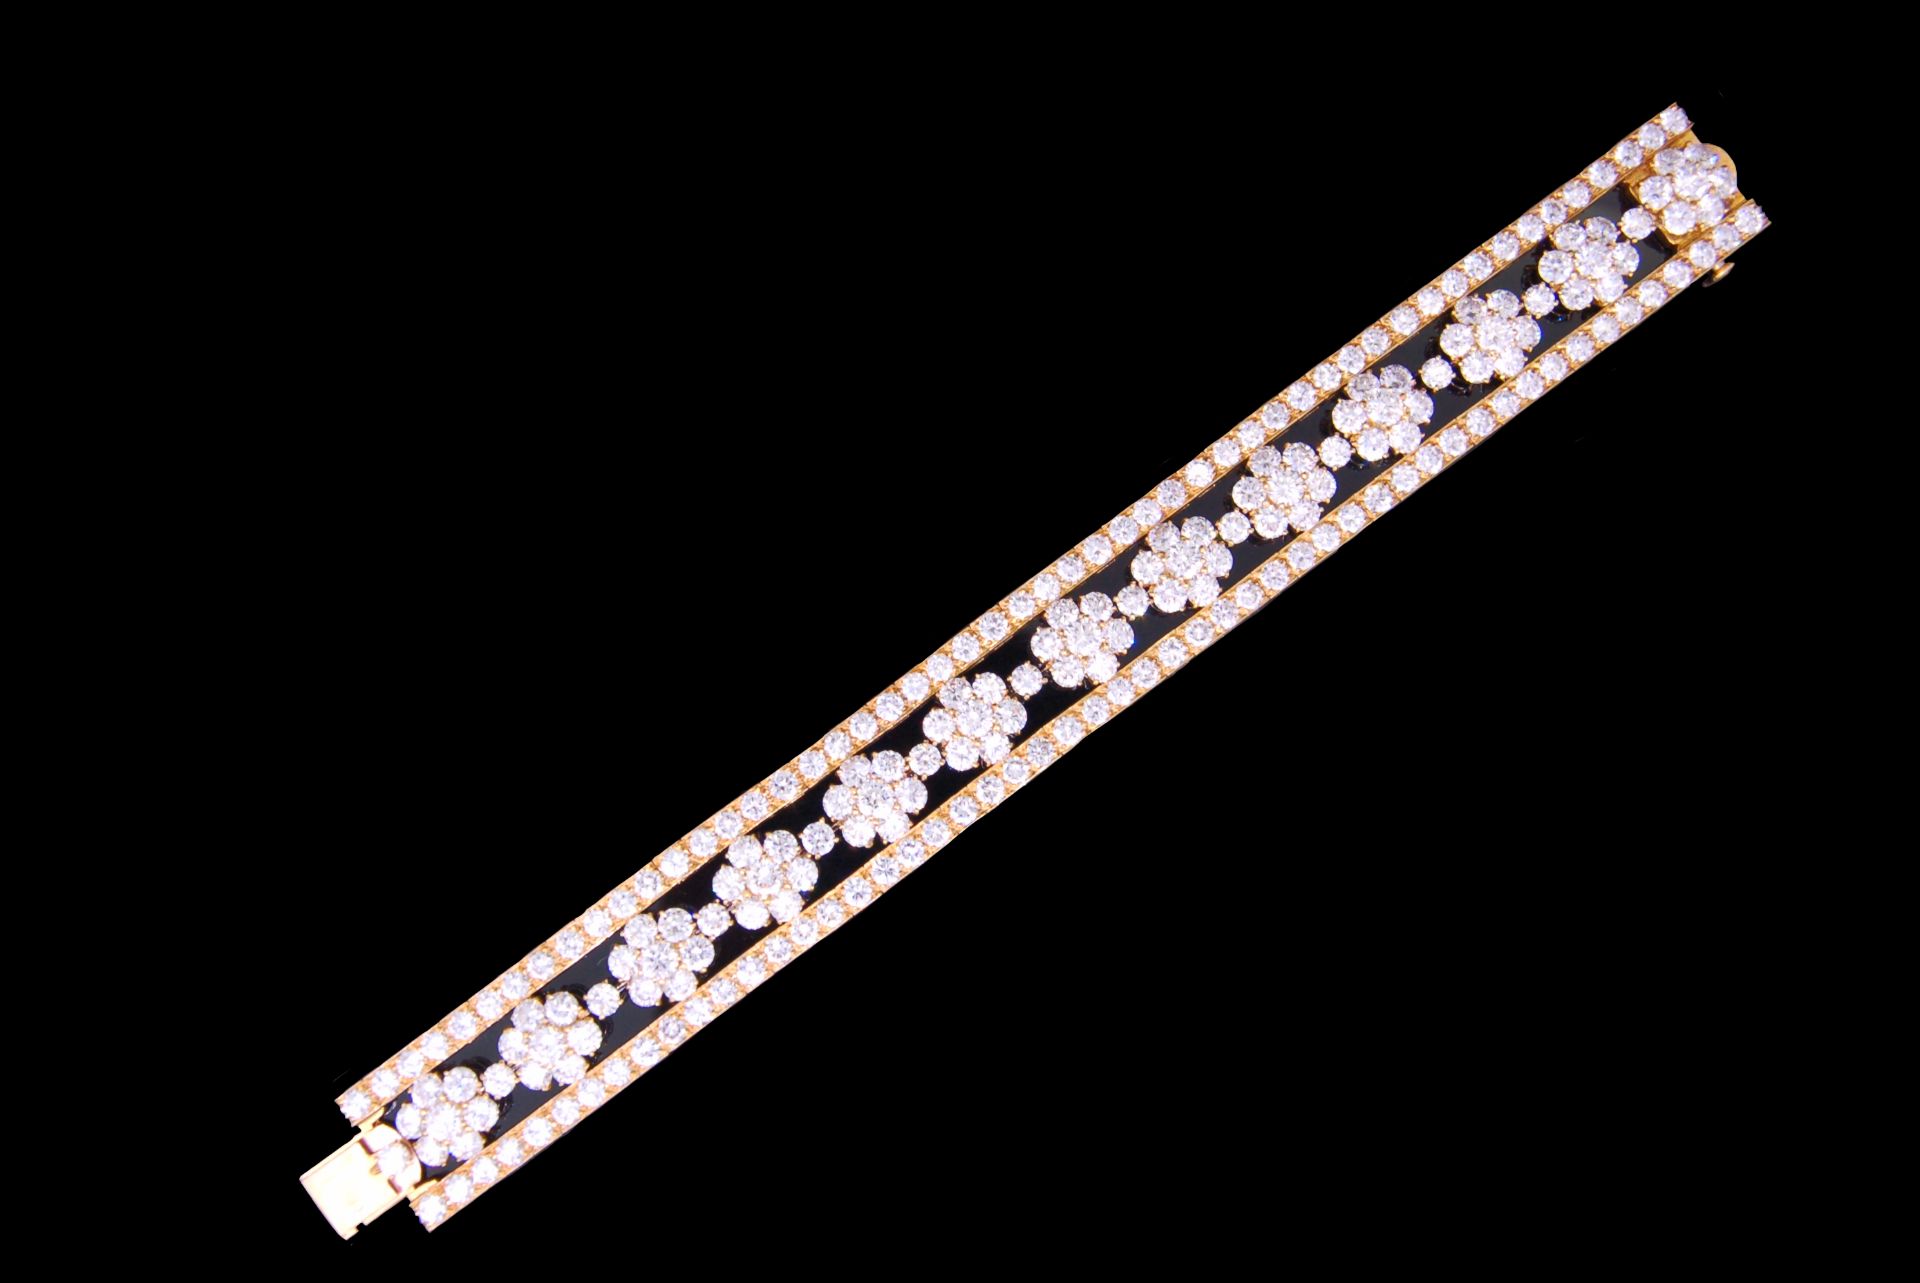 VAN CLEEF & ARPELS, AN IMPORTANT DIAMOND BRACELET - Image 4 of 6